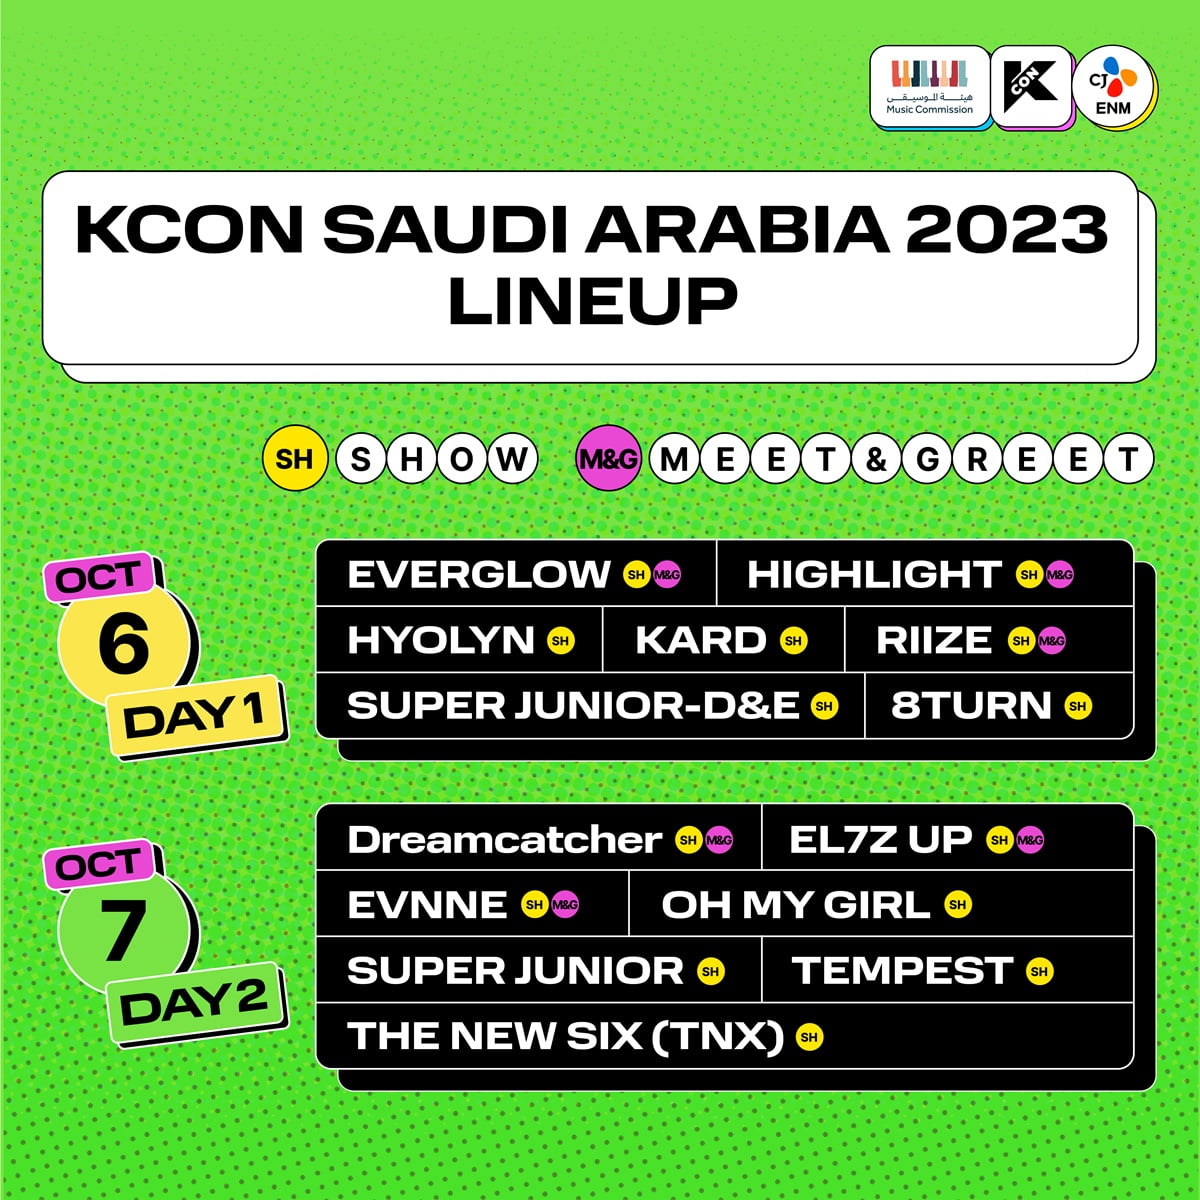 KCON confirmed to be held in Saudi Arabia in October